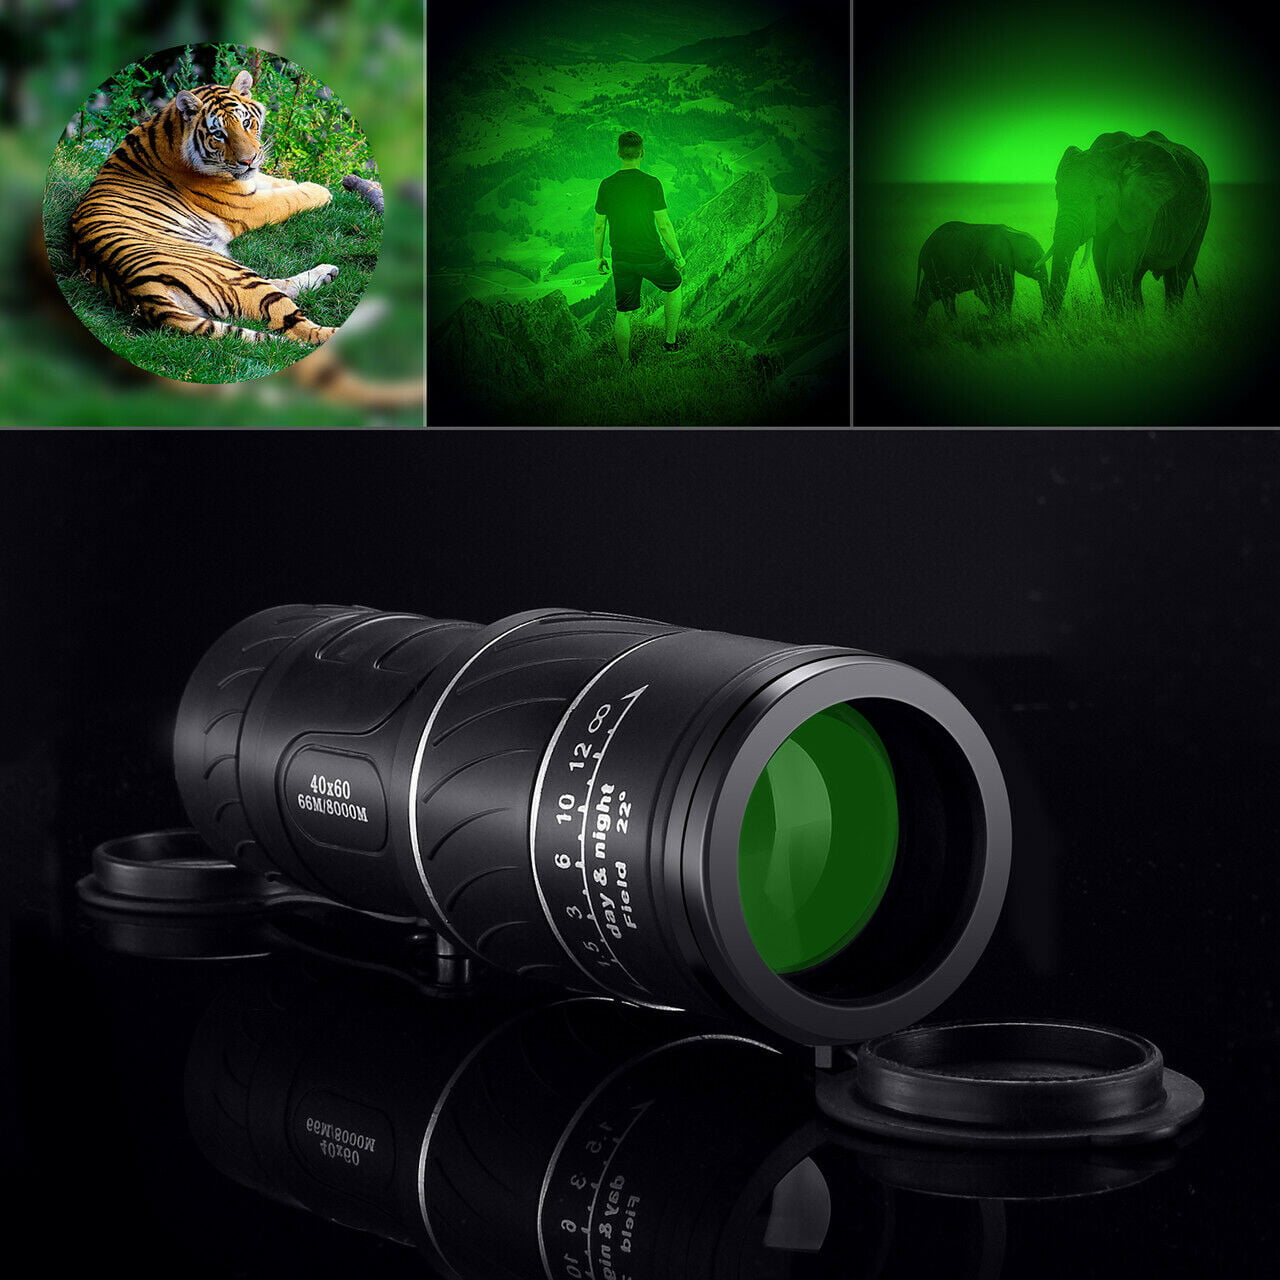 PANDA Night Vision 40x60 HD Optical Monocular Hunting Outdoor Hiking Telescope 